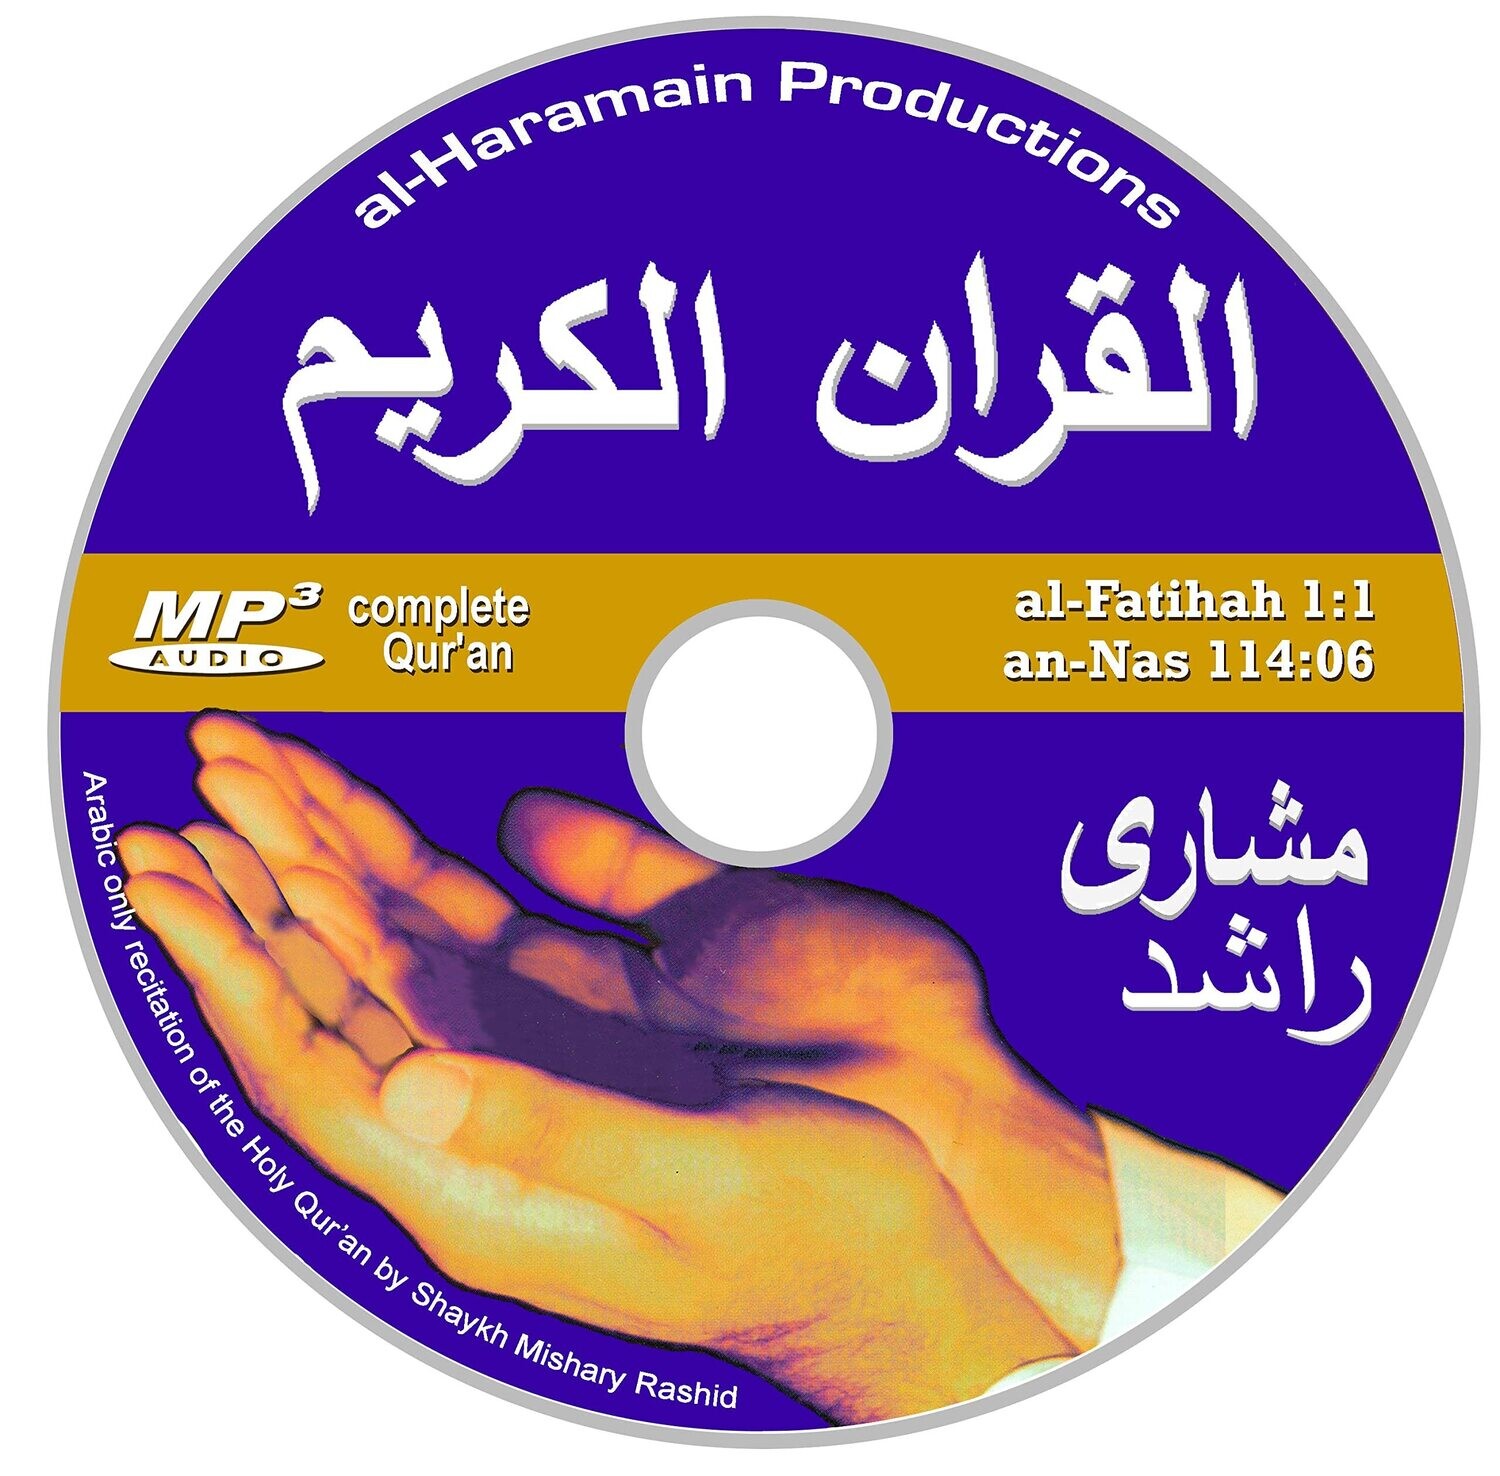 Quran Recitiation - mishary rashid - MP3 format audio CD